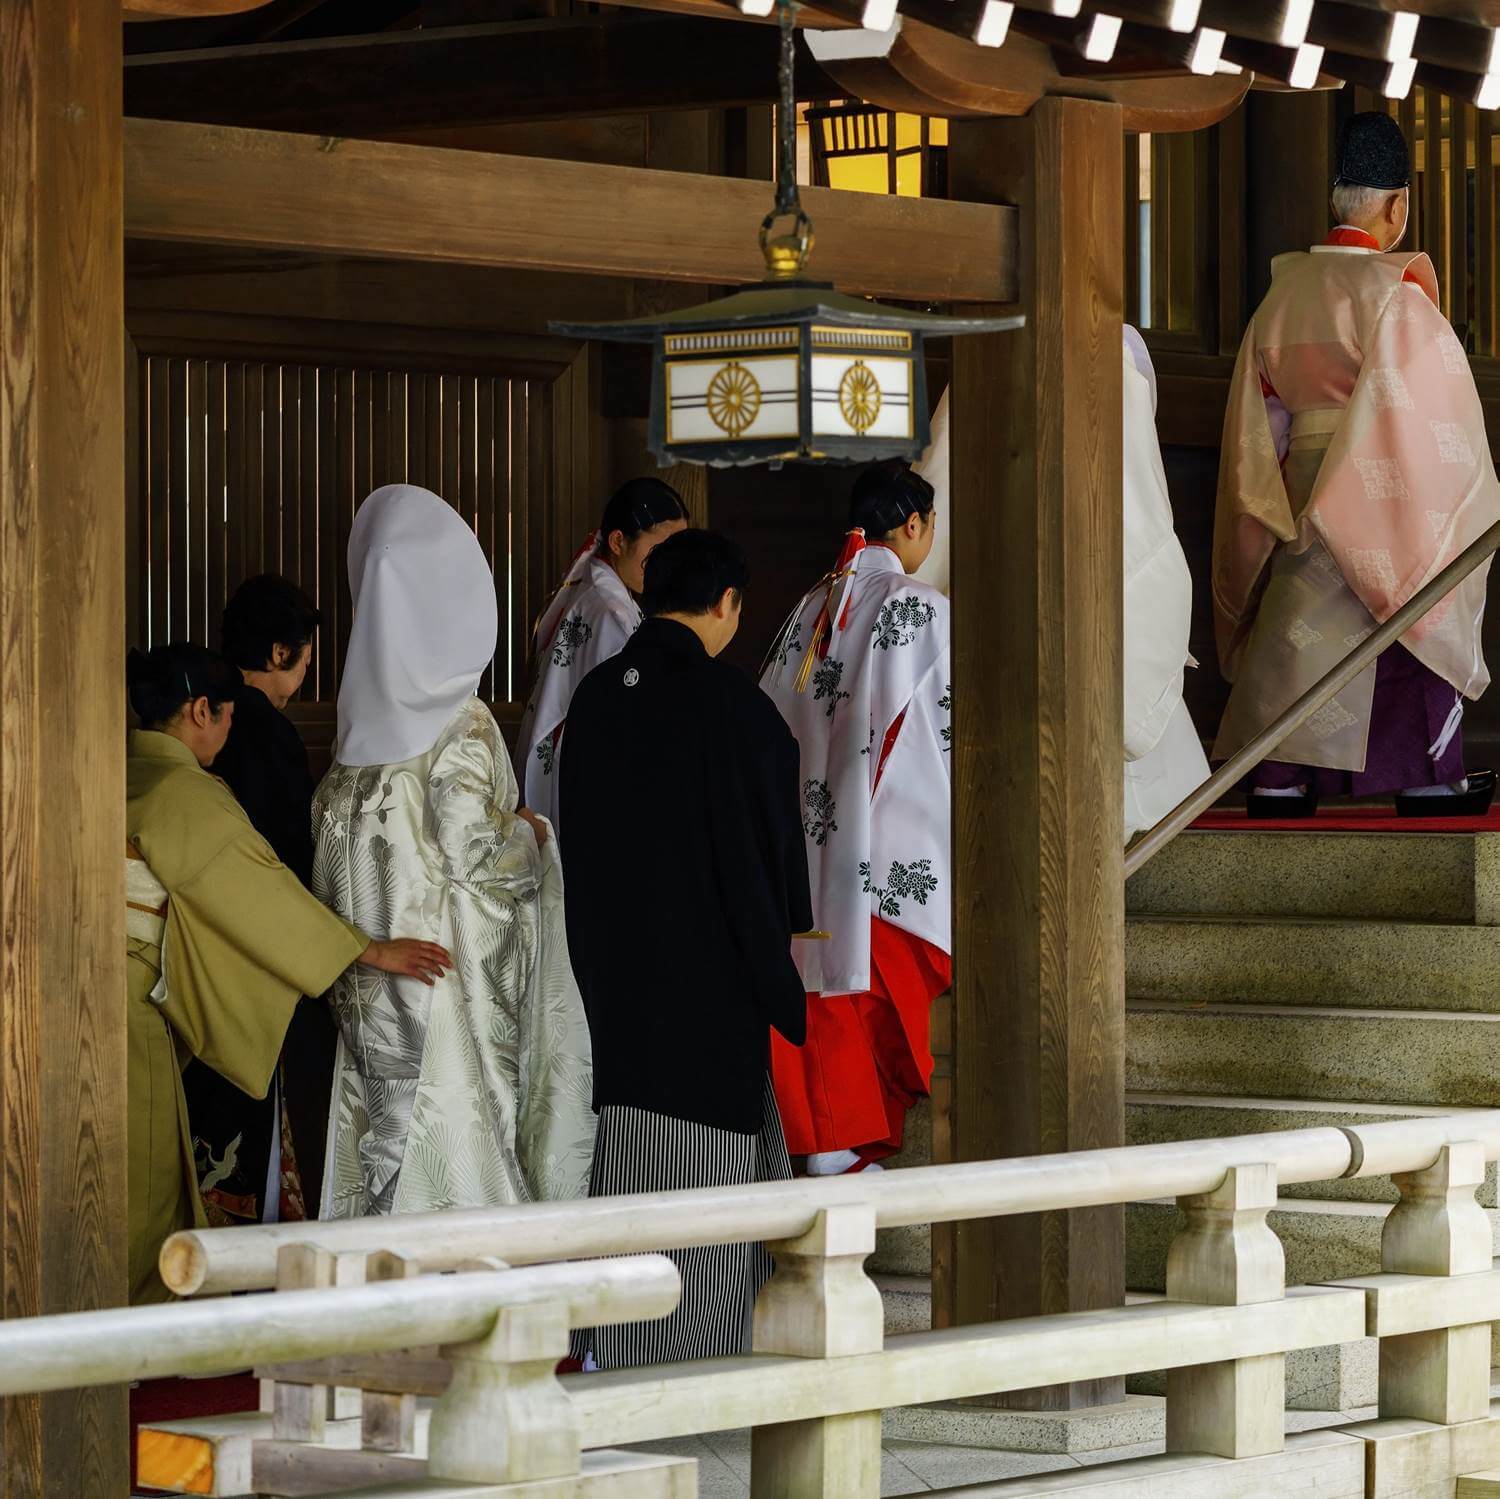 Celebration of a typical Shinto wedding at Meiji Jingu Shrine in Tokyo = Shutterstock